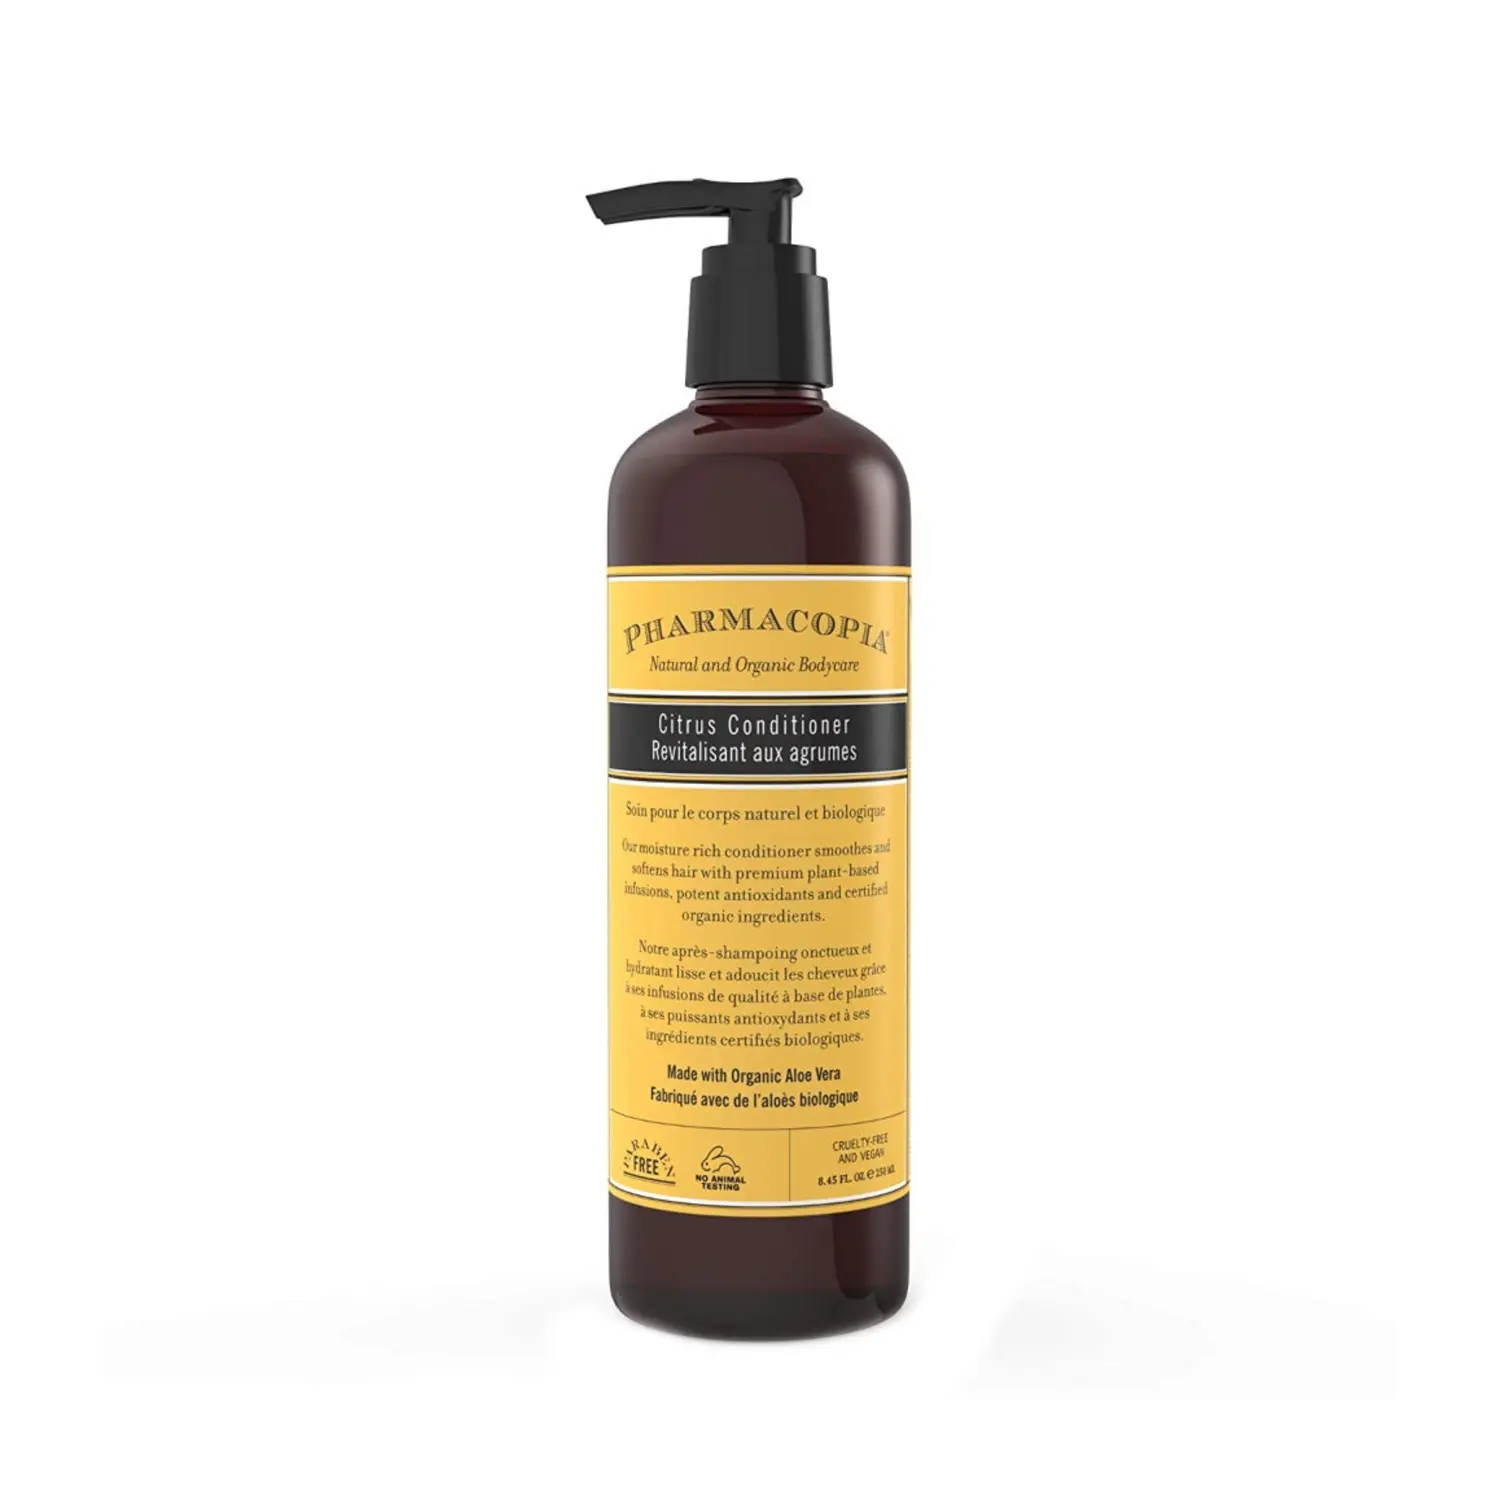 Kimirica | Kimirica Pharmacopia Organic Citrus Hair Conditioner for Smooth Shiny Hair with Aloe Vera (250 ml)